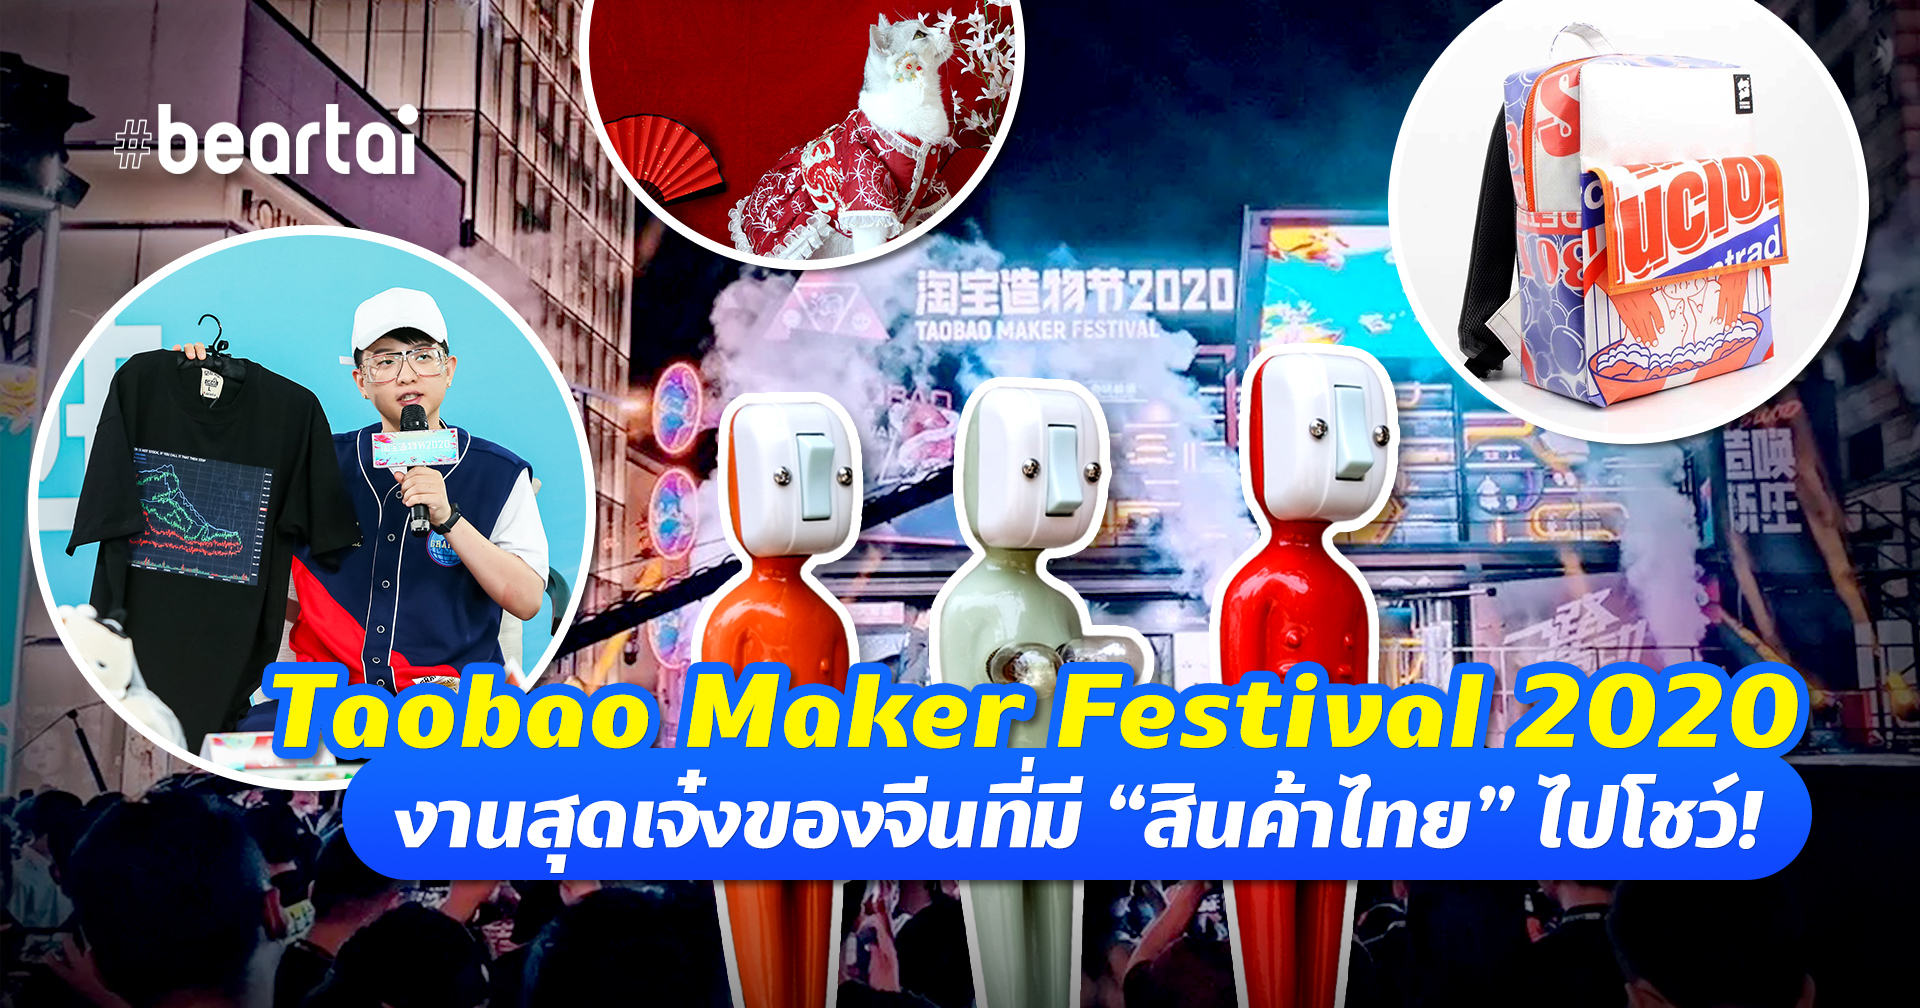 Taobao Maker Festival 2020 ปีนี้เข้าได้ทั่วโลก แถมมีสินค้าคนไทยด้วย!